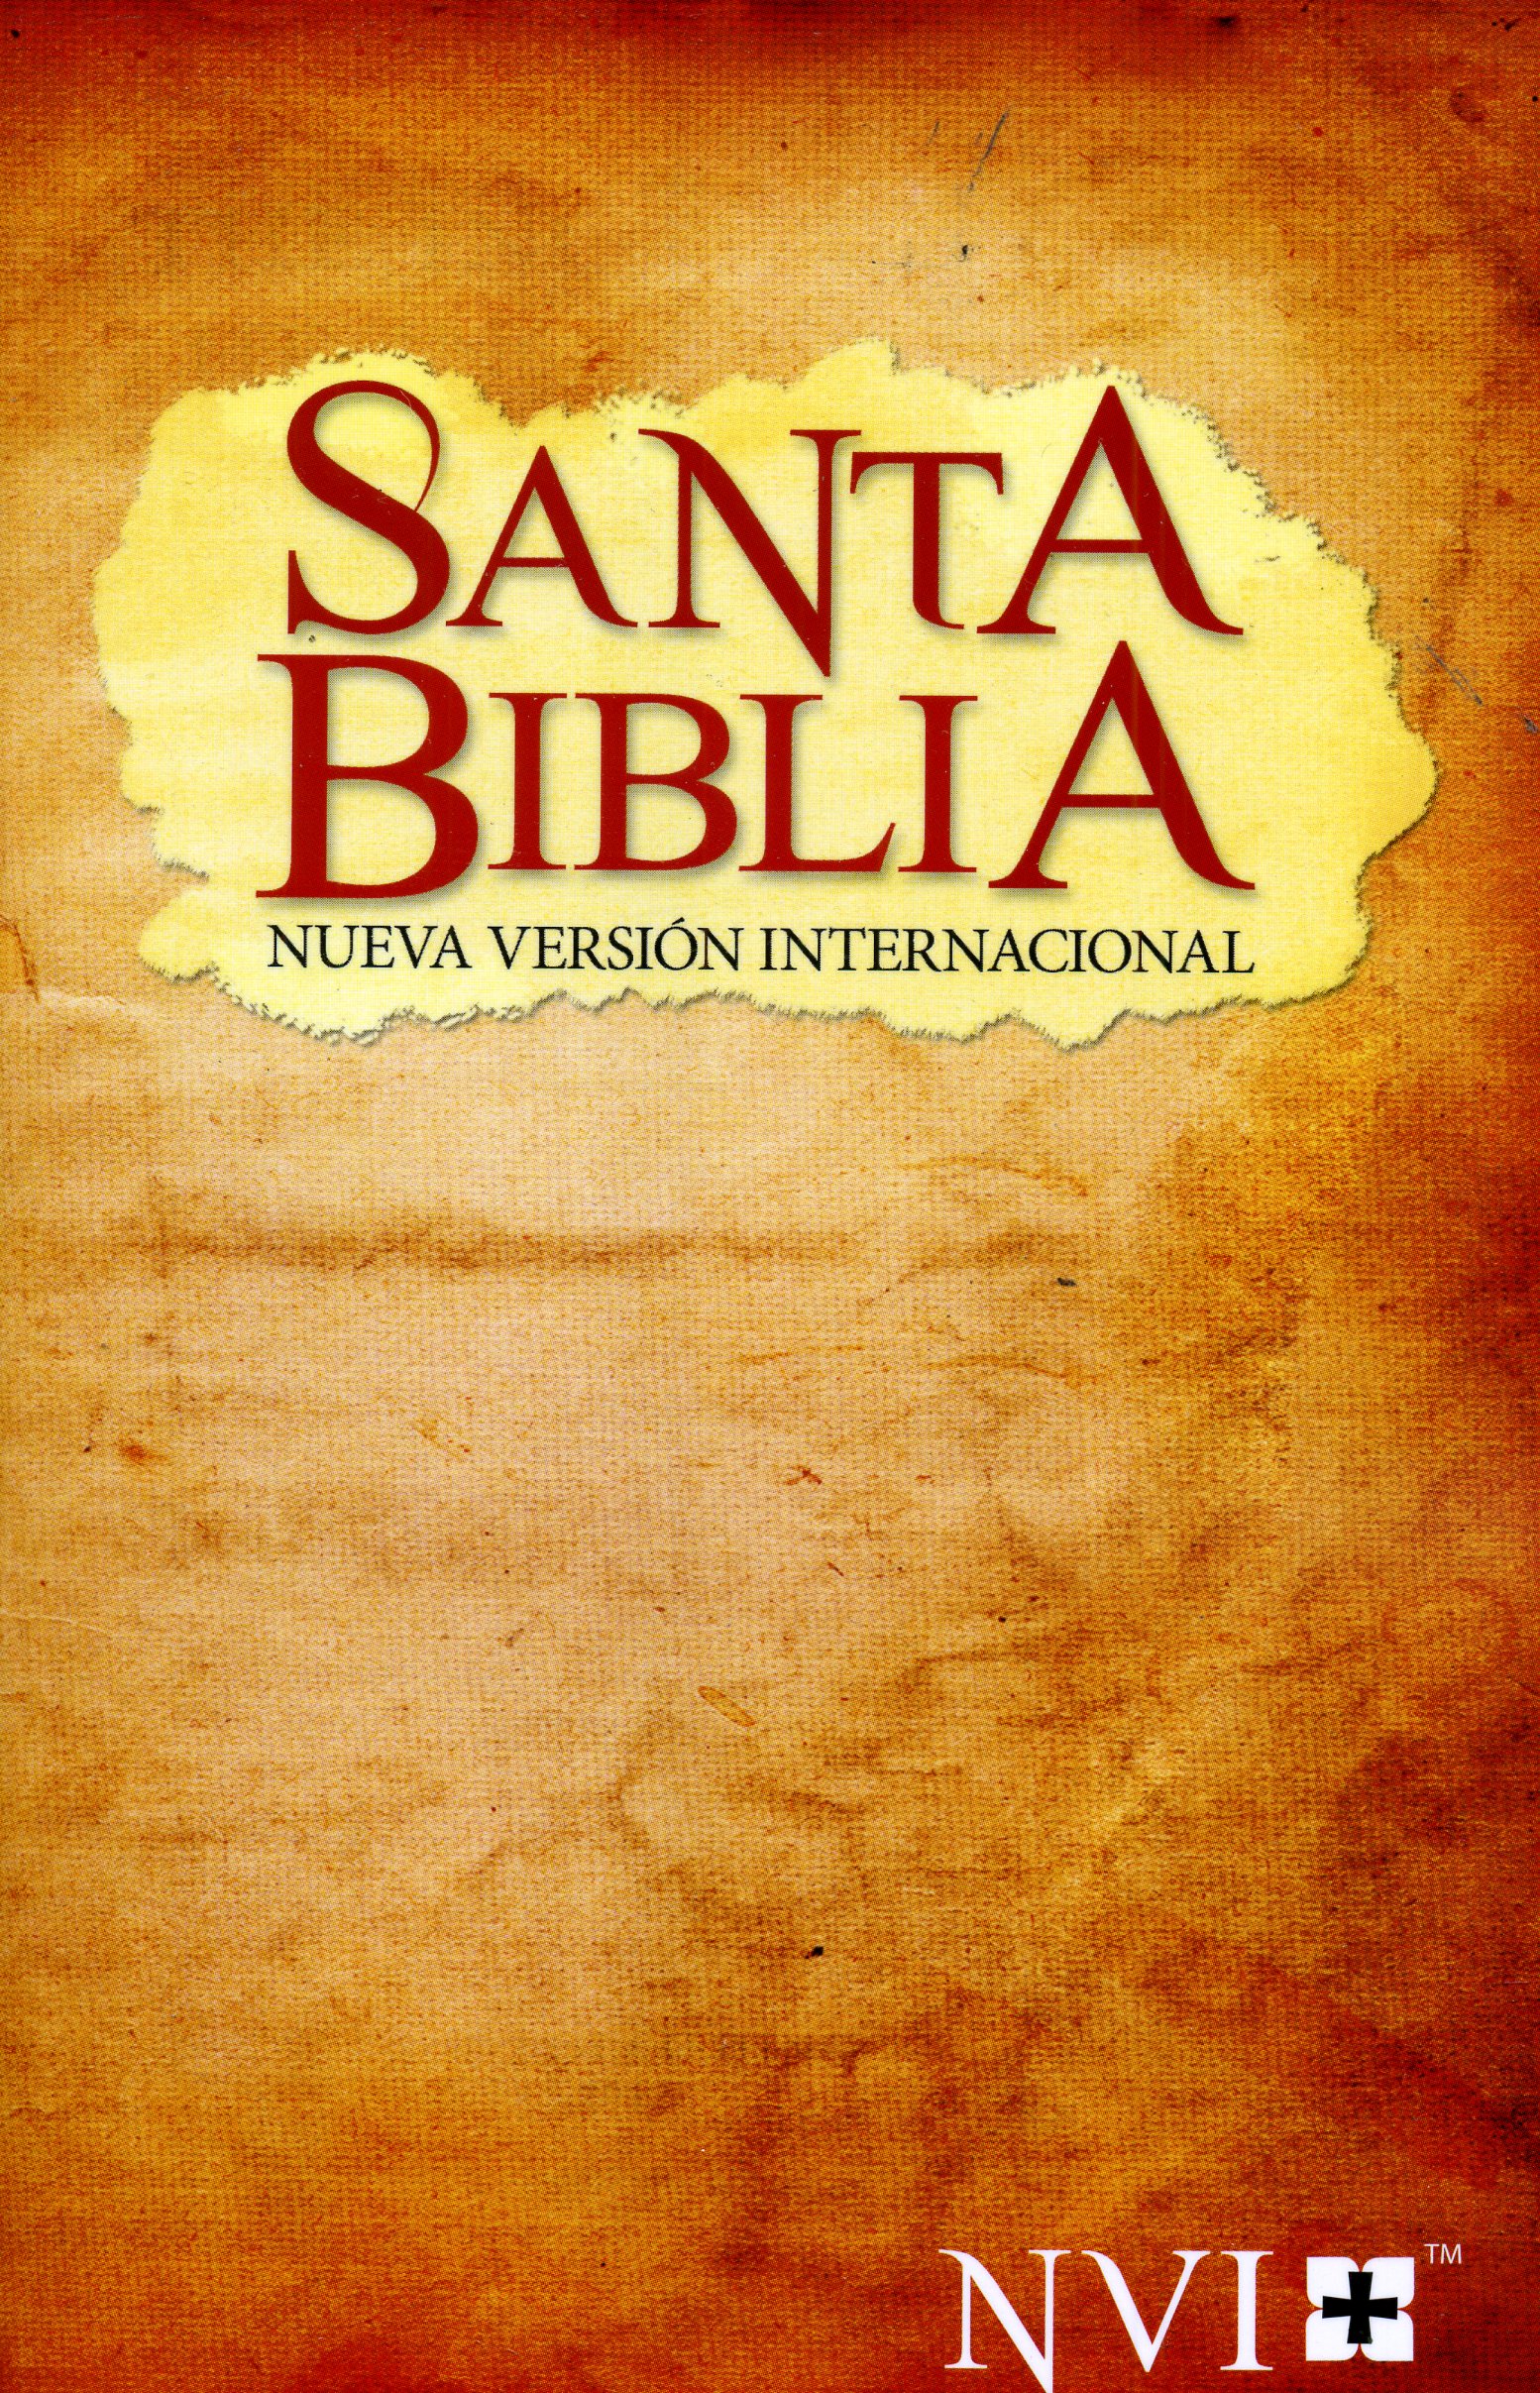 NVI Santa Biblia